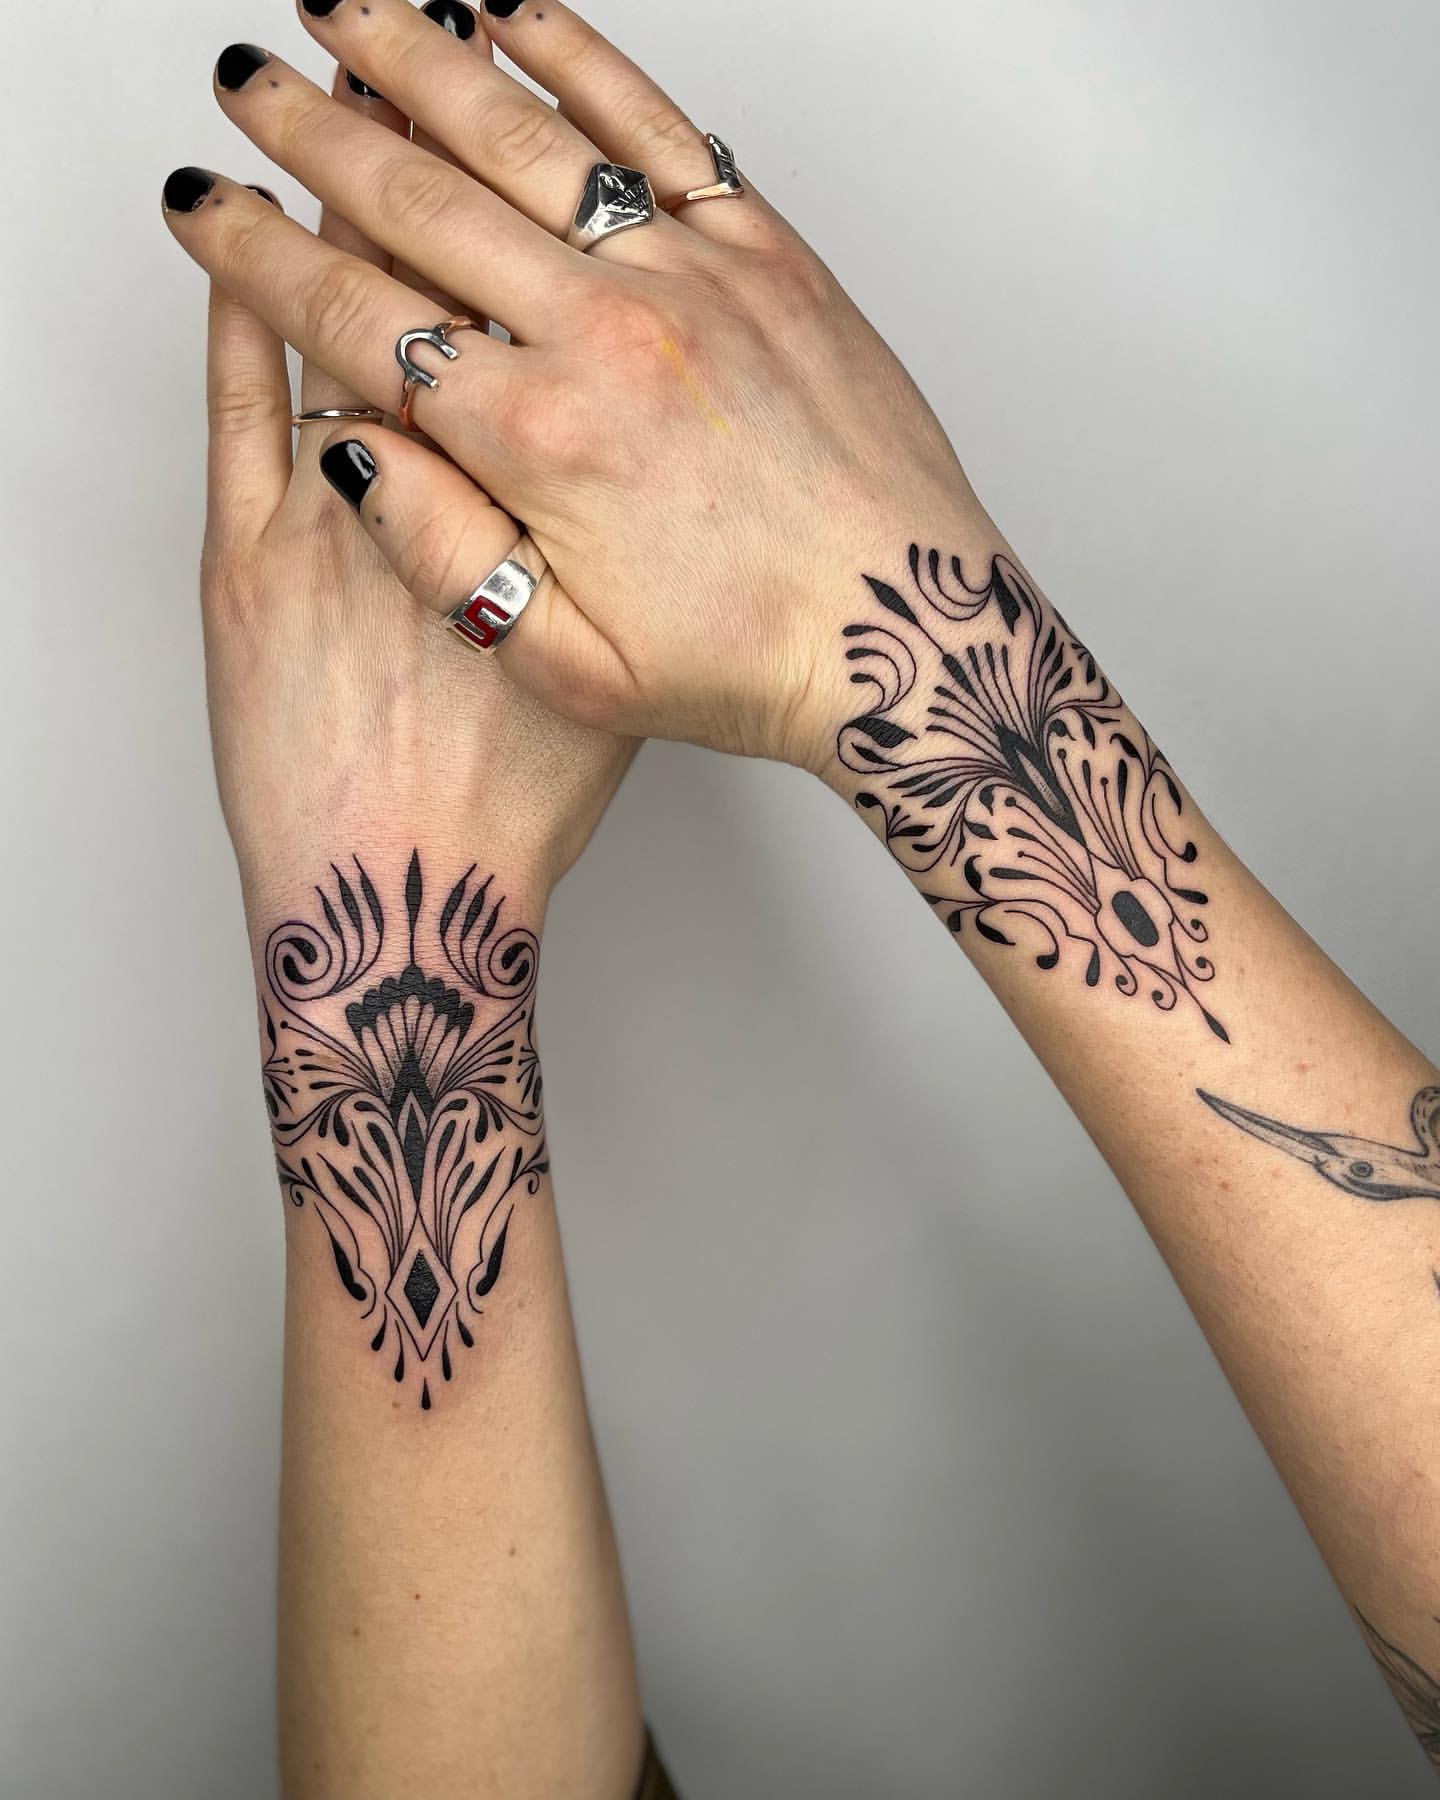 Wrist Tattoo Ideas for Women 21